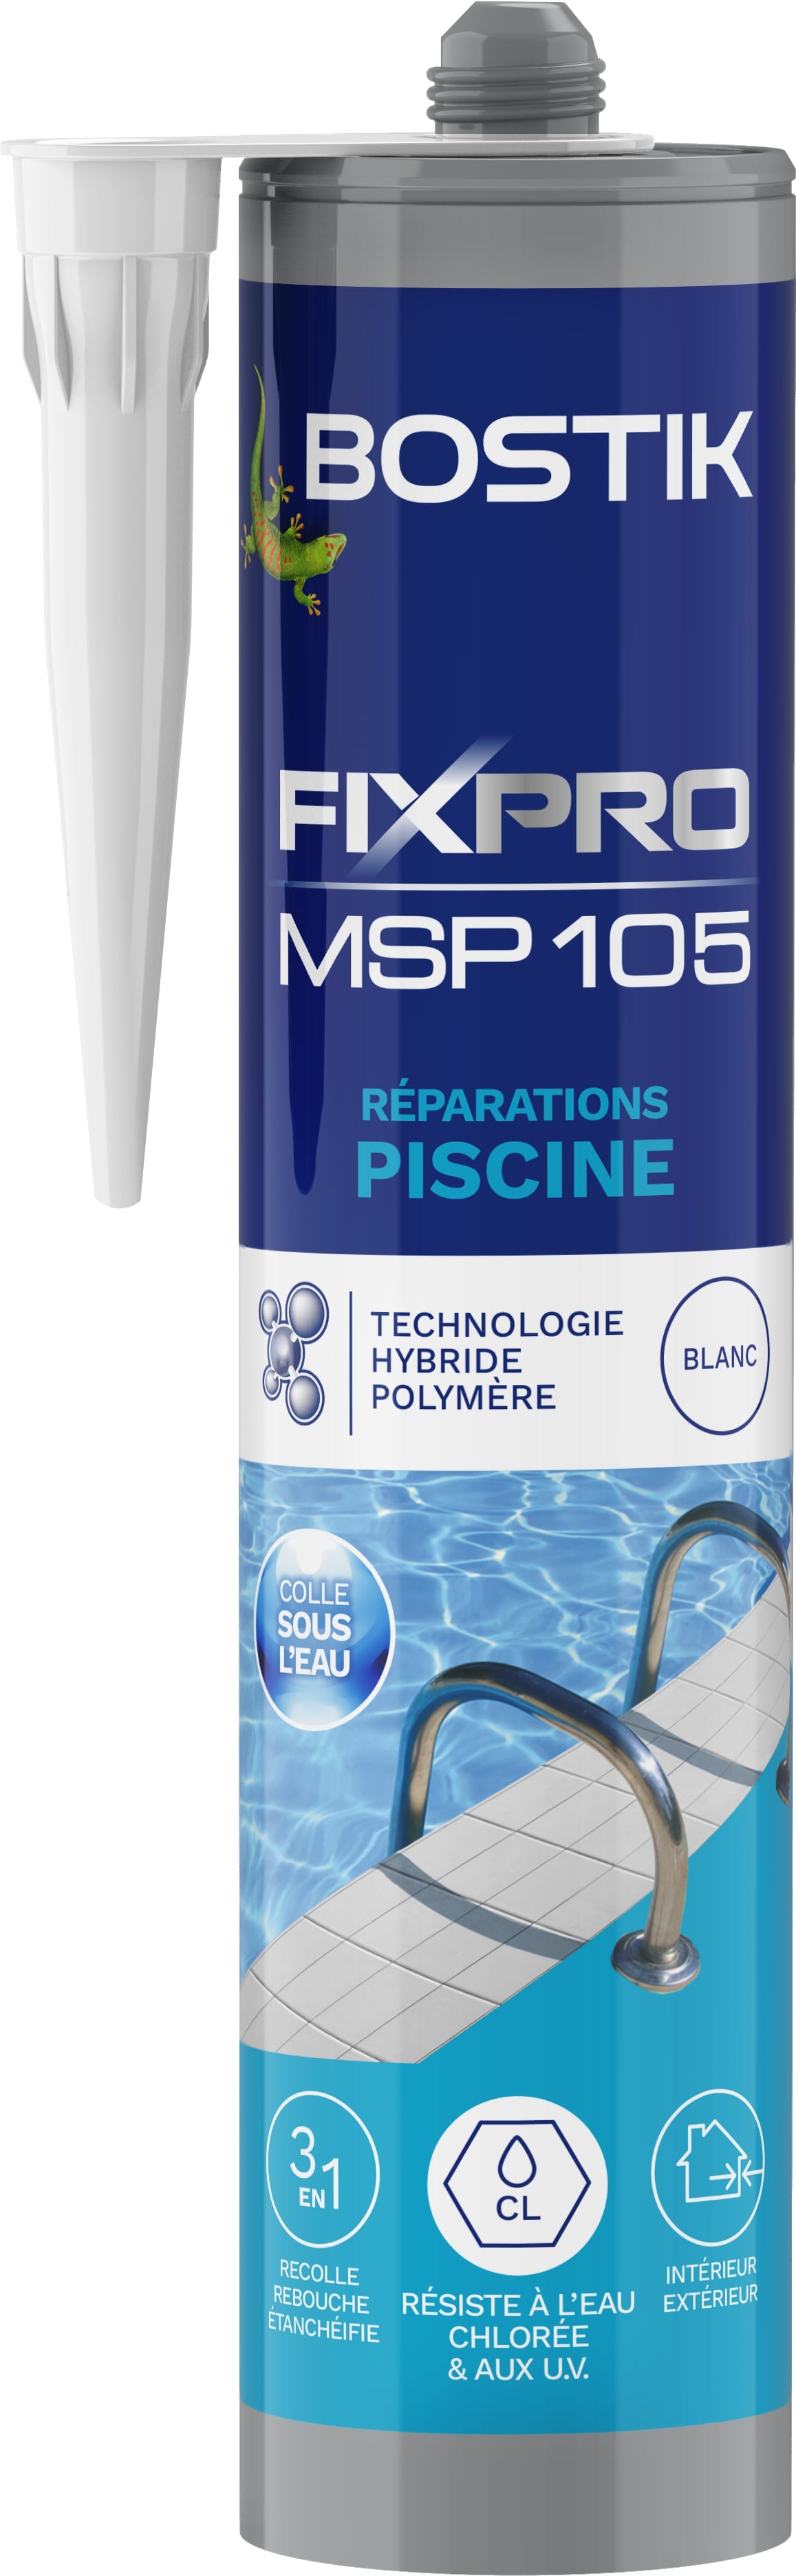 Colle Mastic FIXPRO MSP 105 Piscine 290ml - BOSTIK